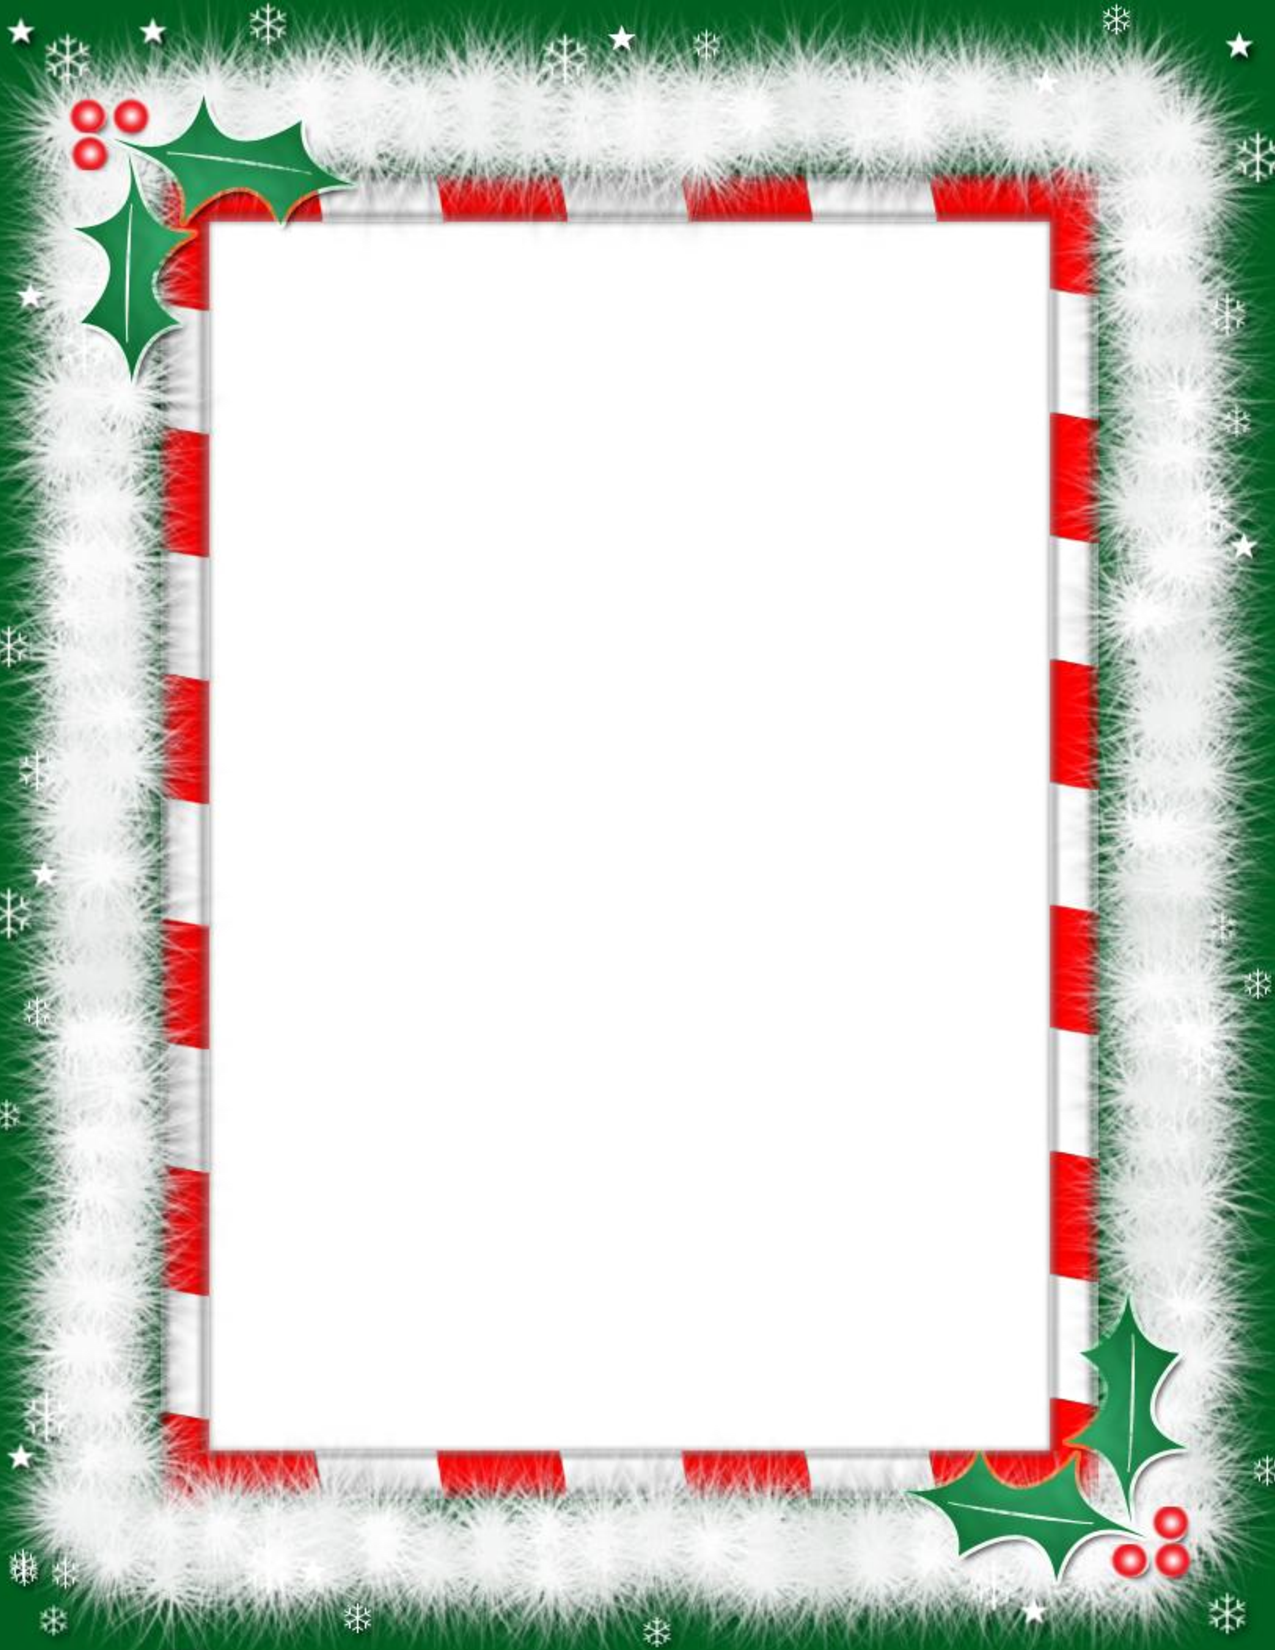 86 Creating Christmas Card Border Template Free in Word with Christmas Card Border Template Free